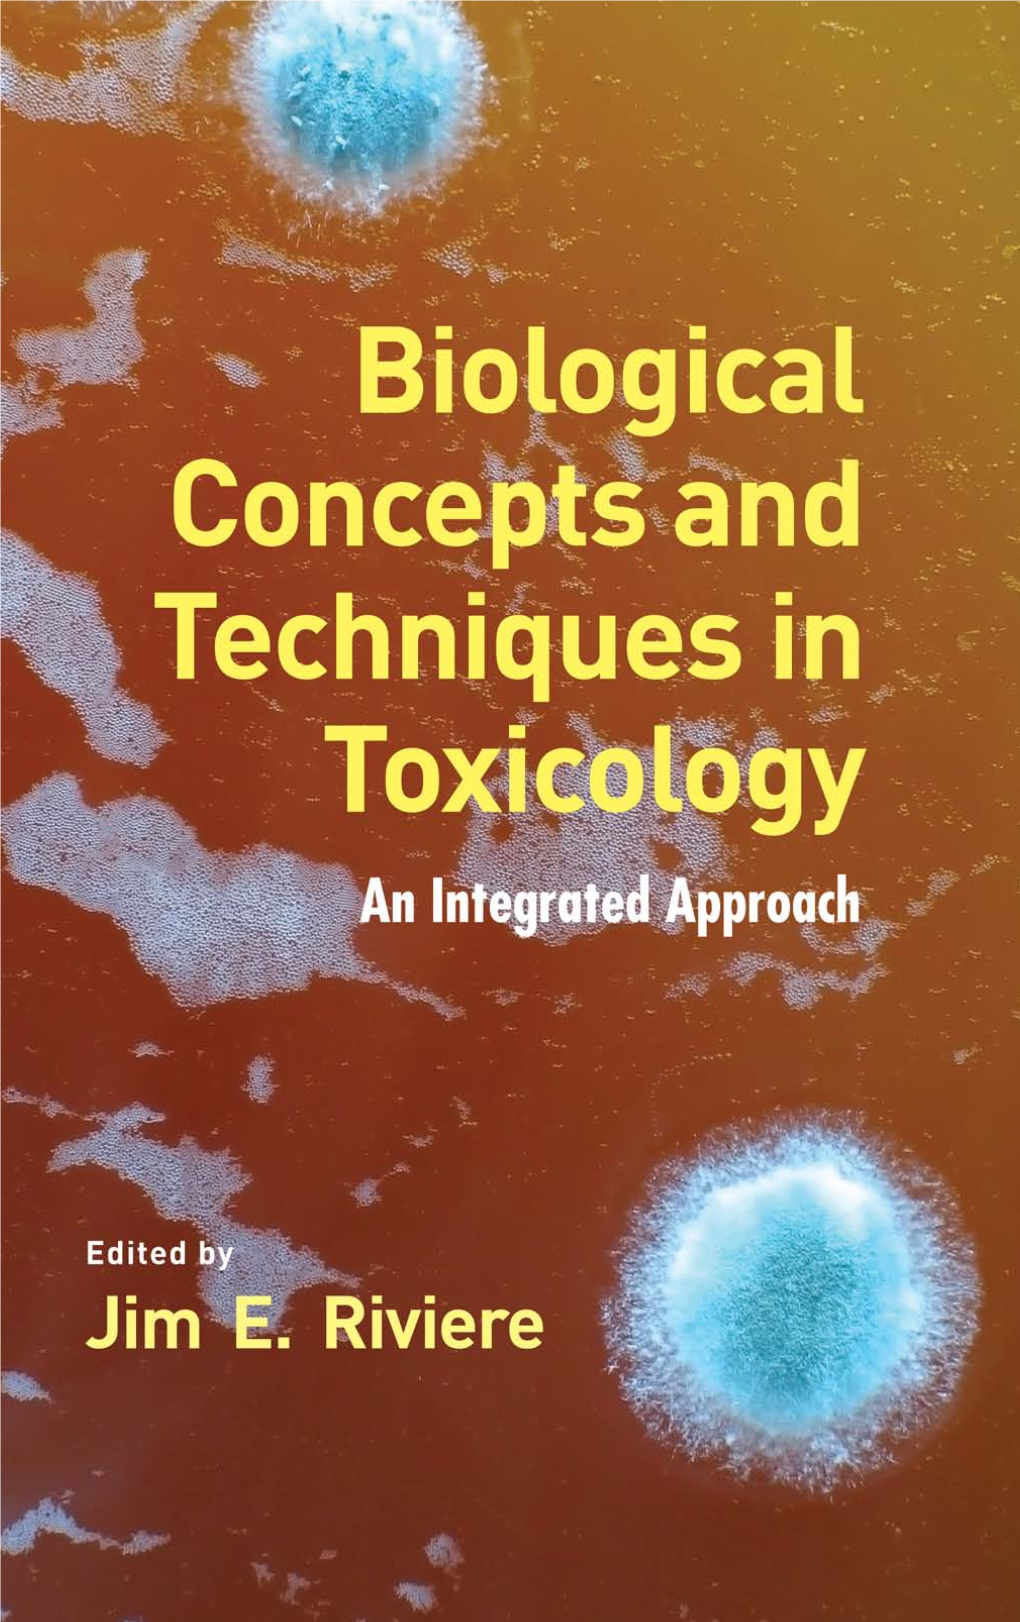 2 Toxicogenomics: Gene Expression Analysis and Computational Tools